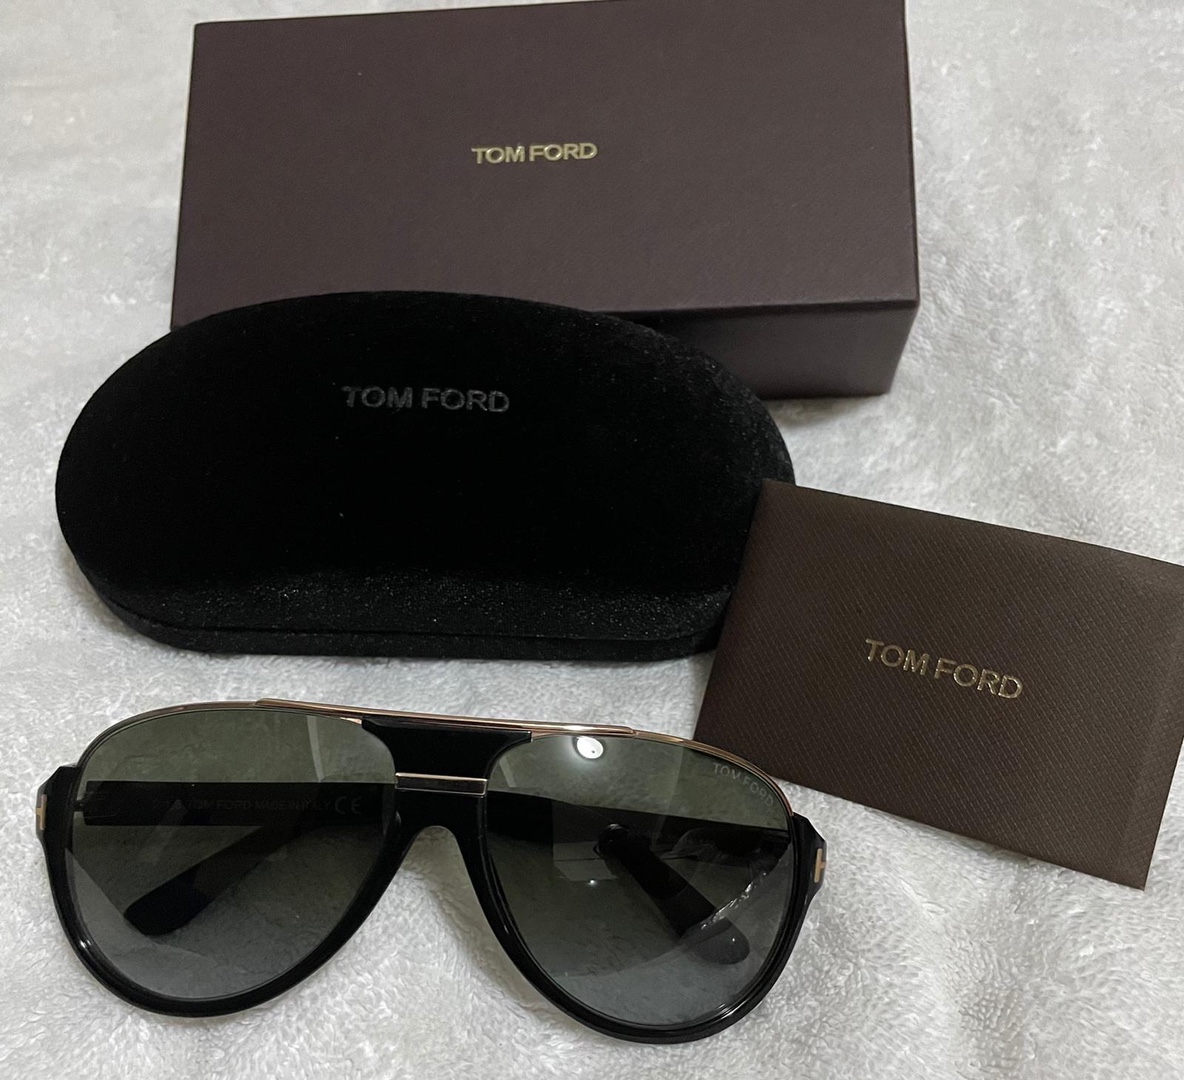 joyas, relojes y accesorios - Lentes Tom Ford Dimitry Sunglasses 5